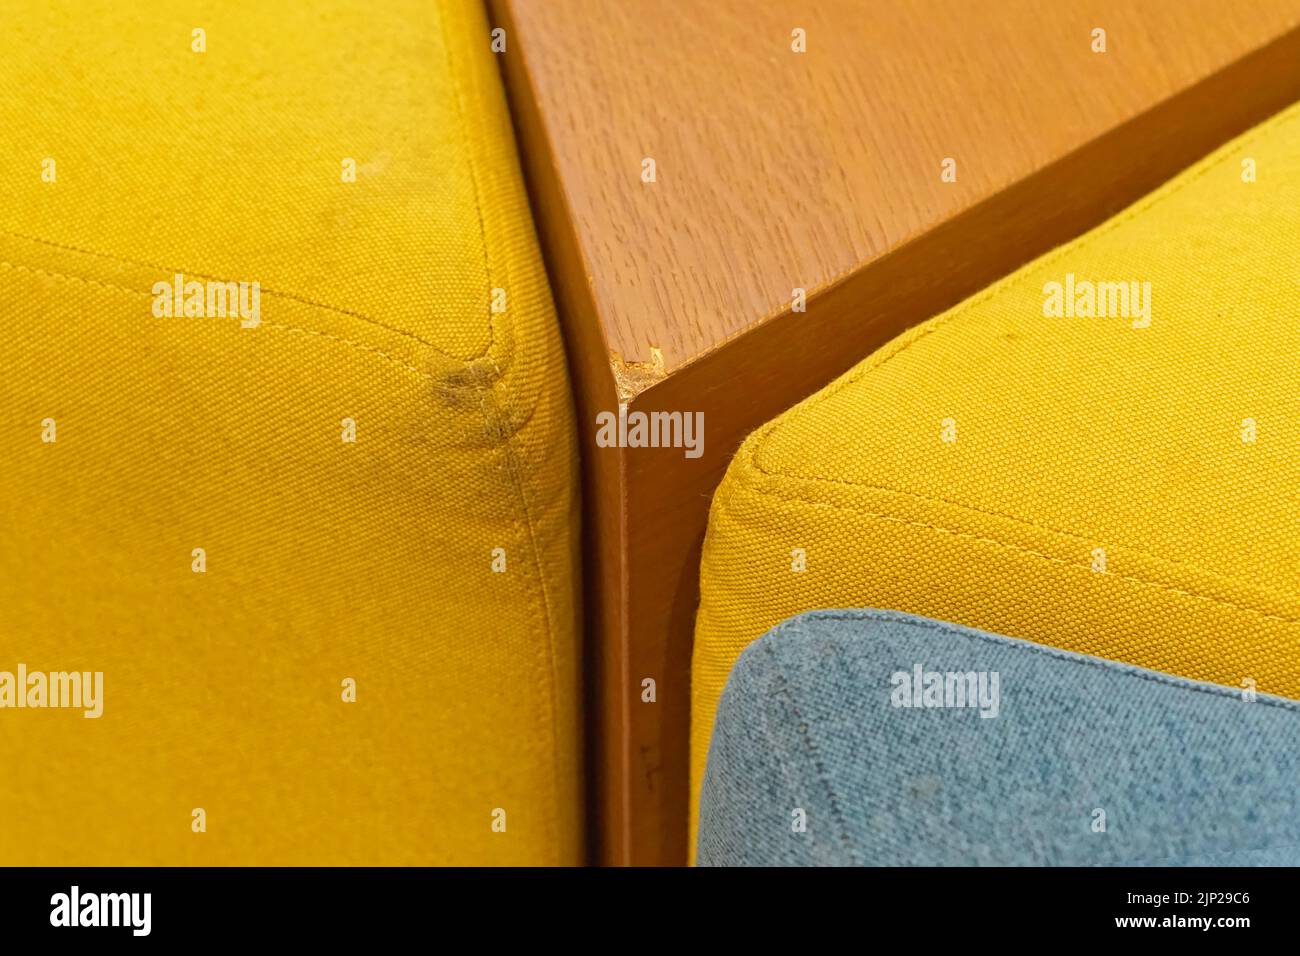 Chipped sharp corner damage at modern wooden furniture Stock Photo